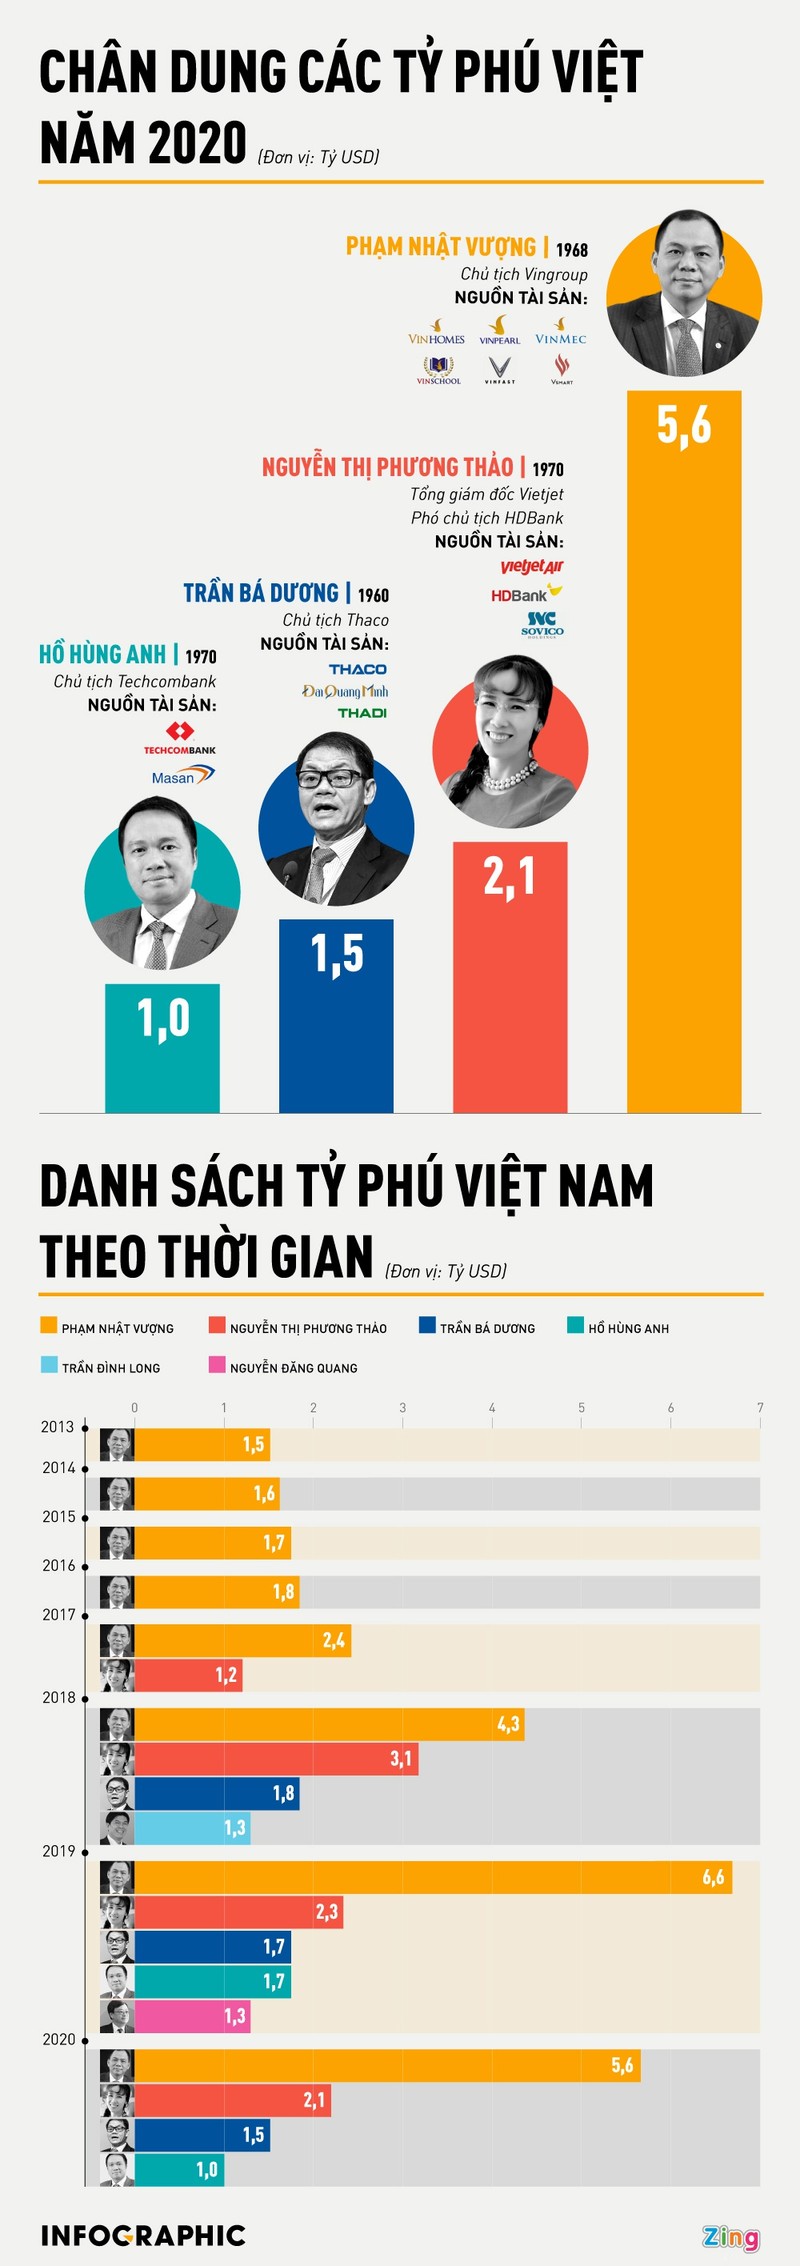 Tai san cua cac ty phu Viet Nam thay doi ra sao 7 nam qua?